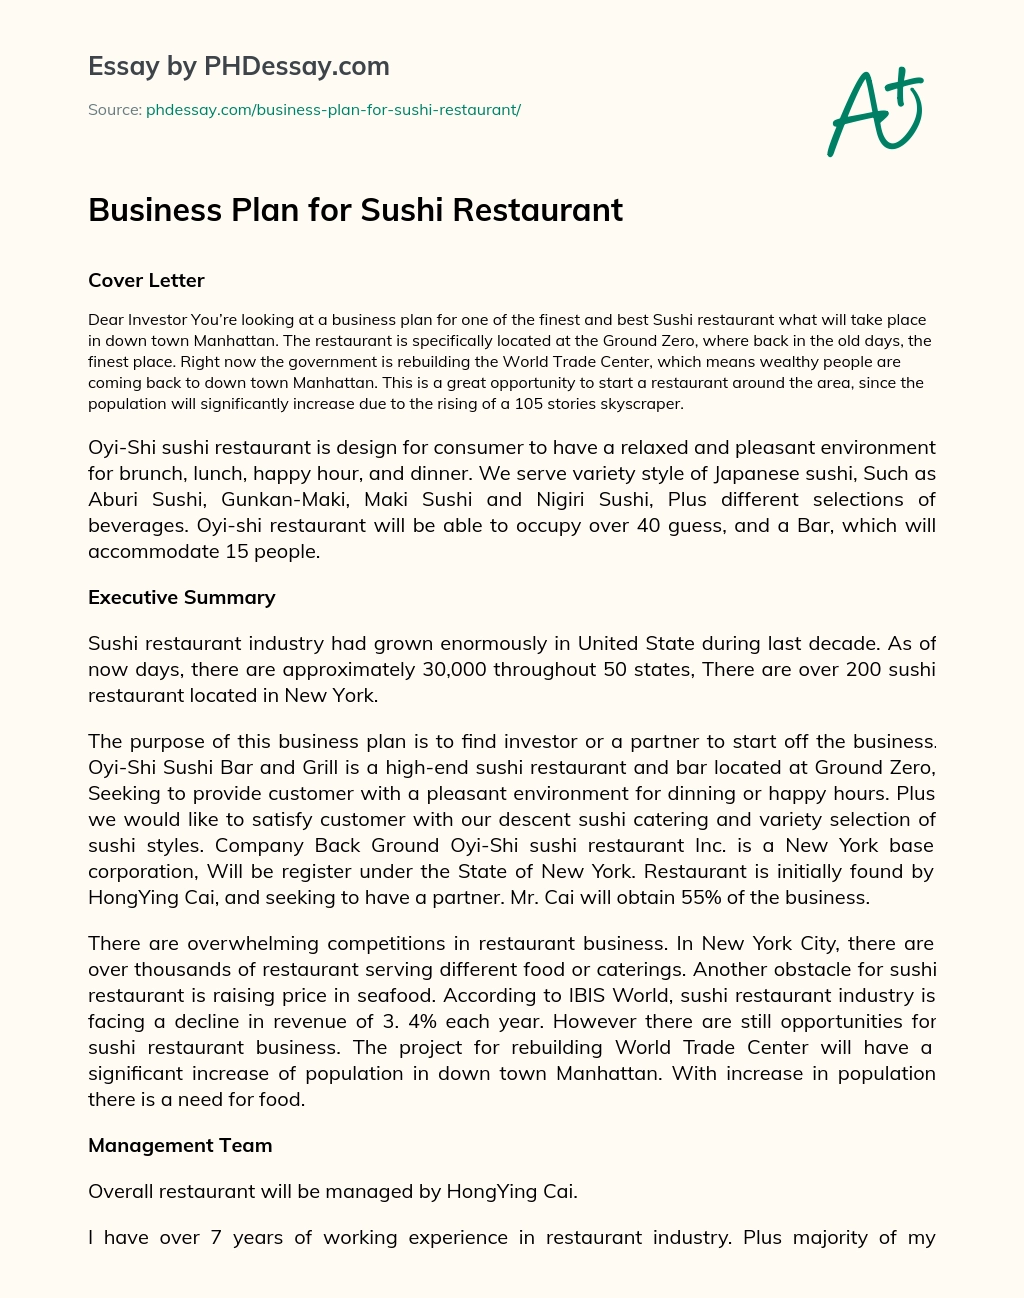 Business Plan for Sushi Restaurant essay